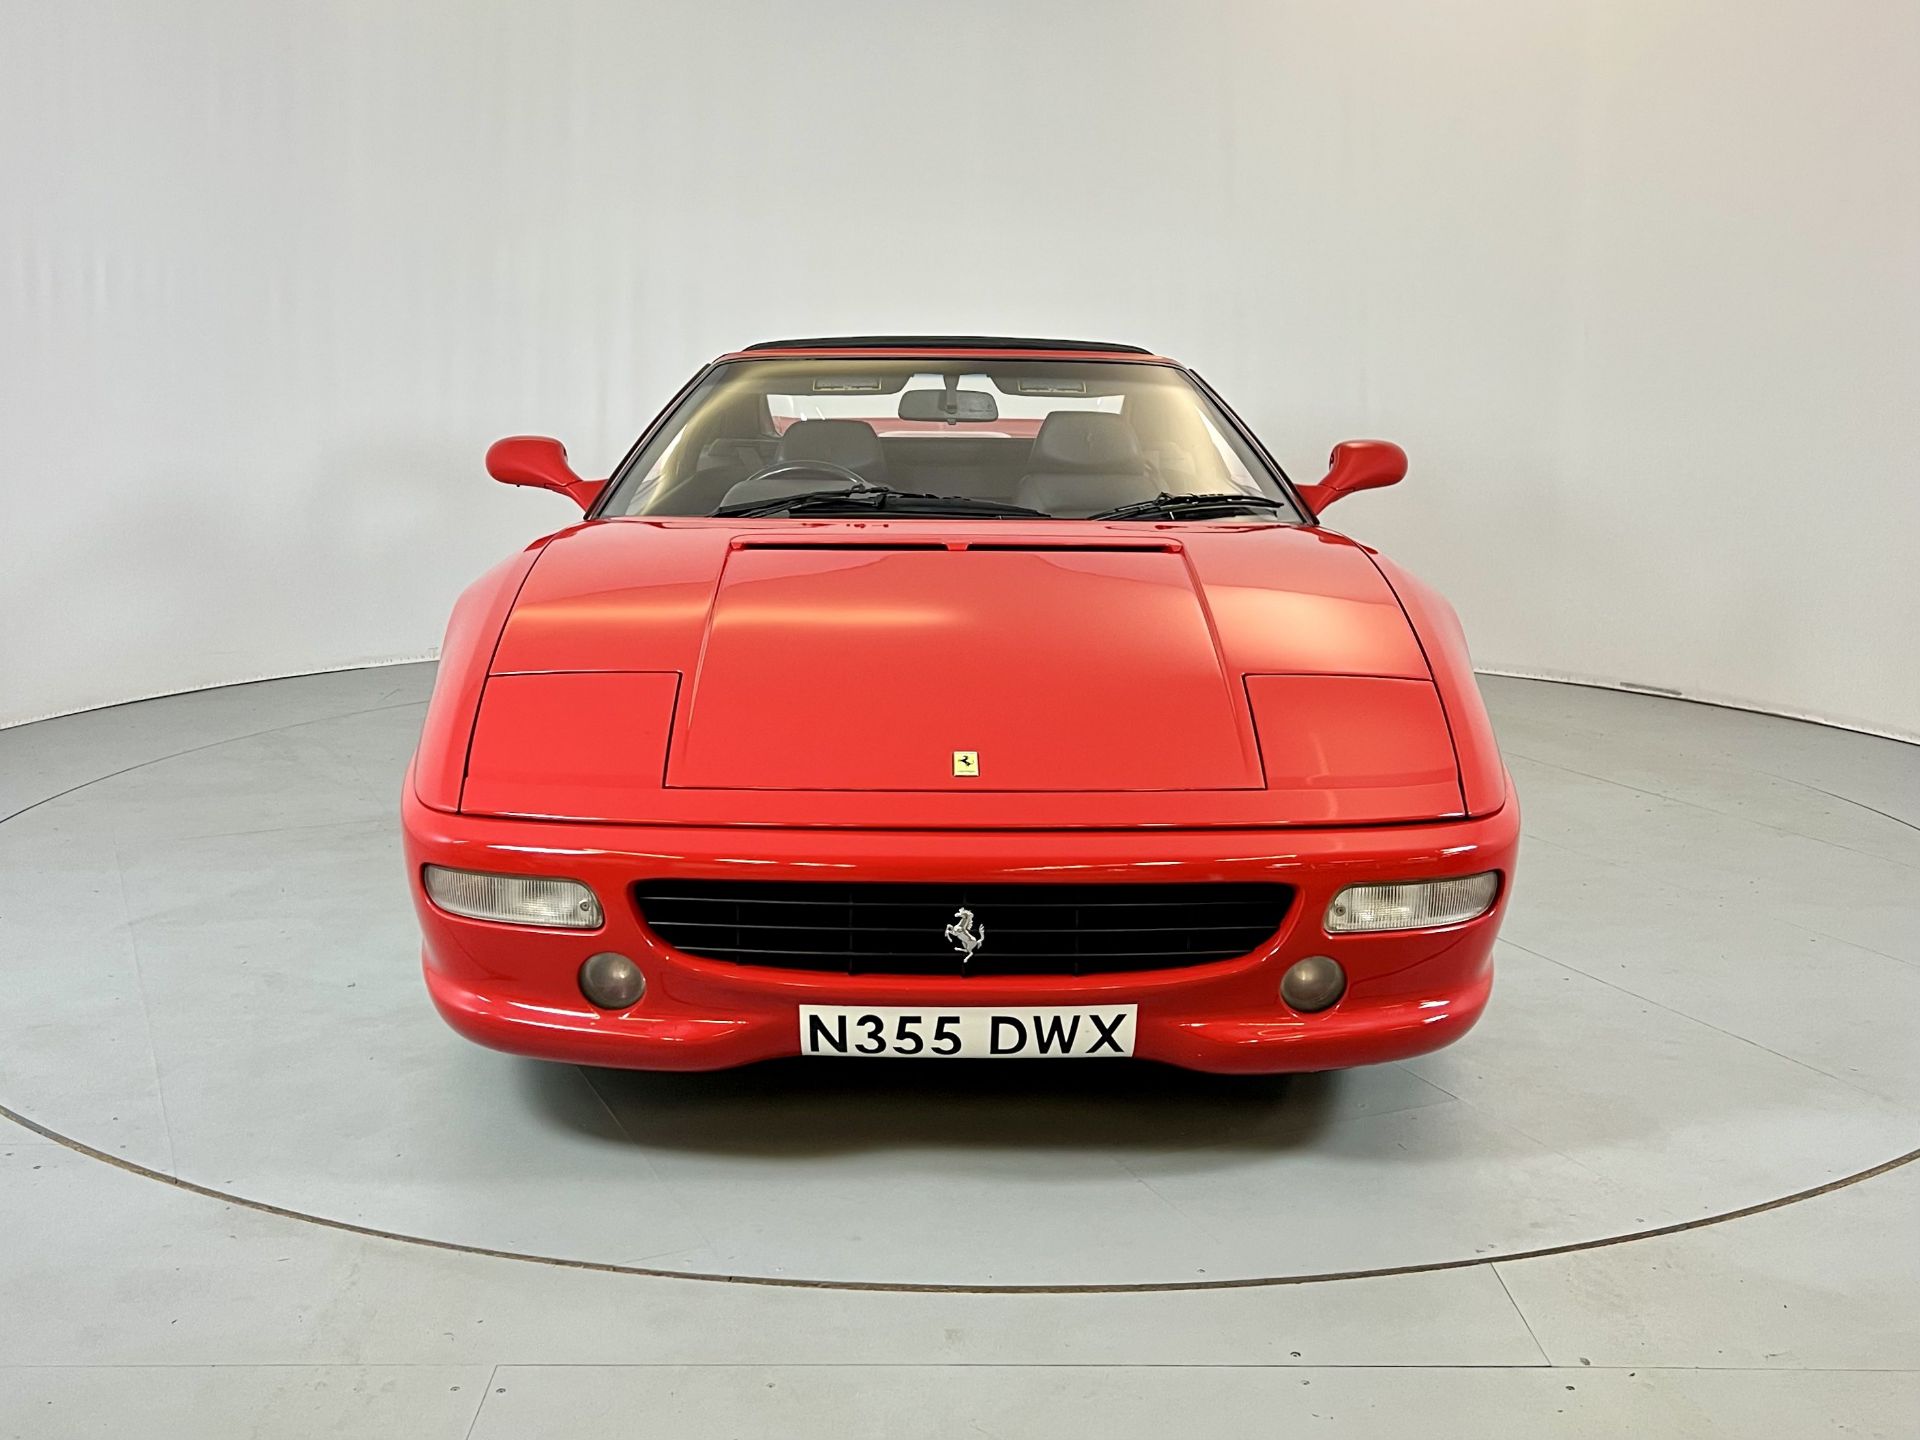 Ferrari 355 GTS - Image 2 of 40